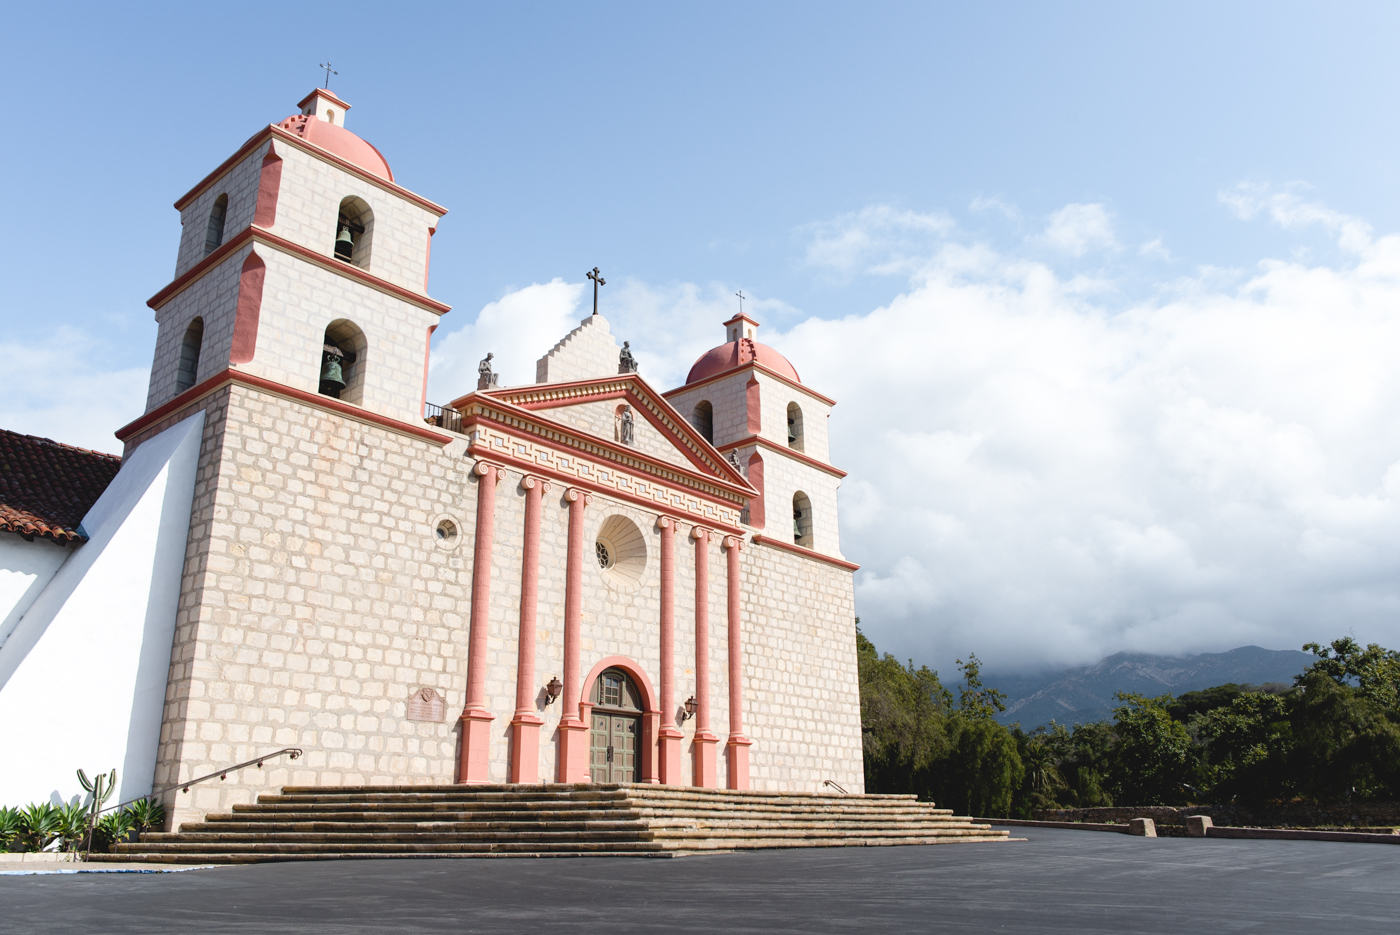 The Santa Barbara Mission by French Californian